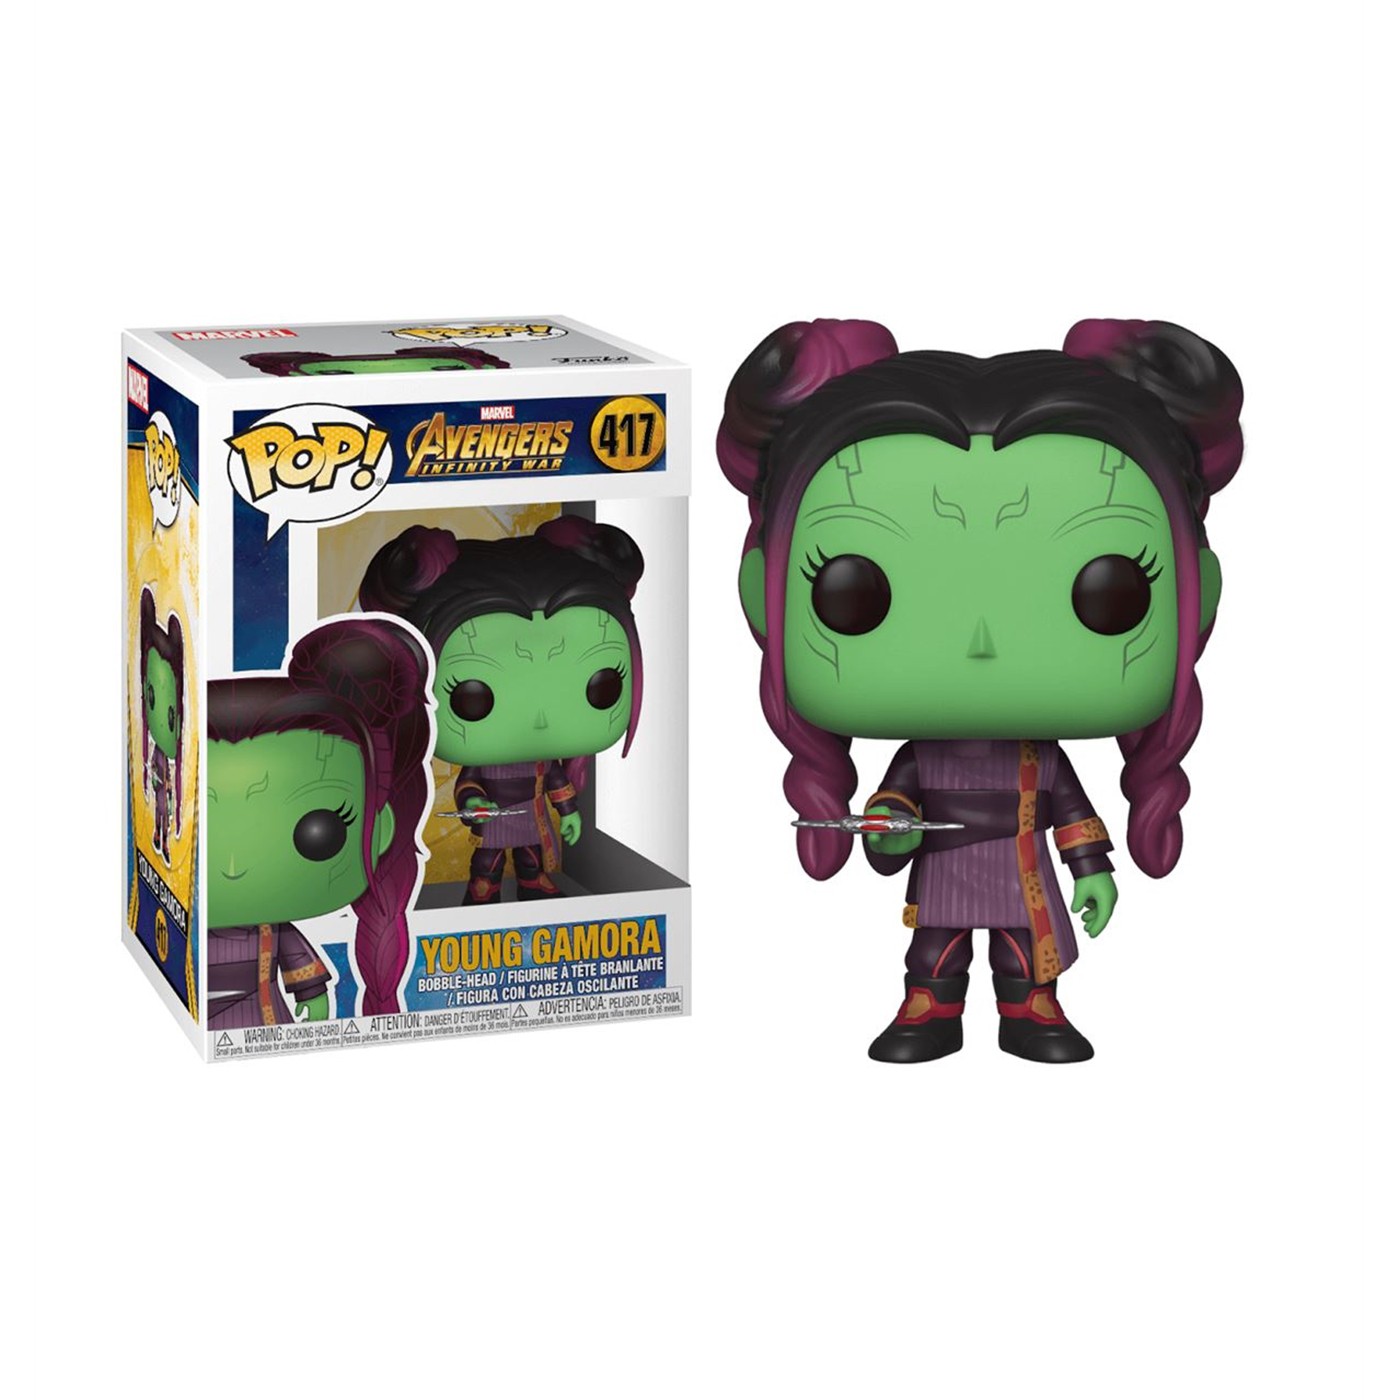 Young Gamora Booble Head Marvel Avengers Infinity War Funko Pop n°417 